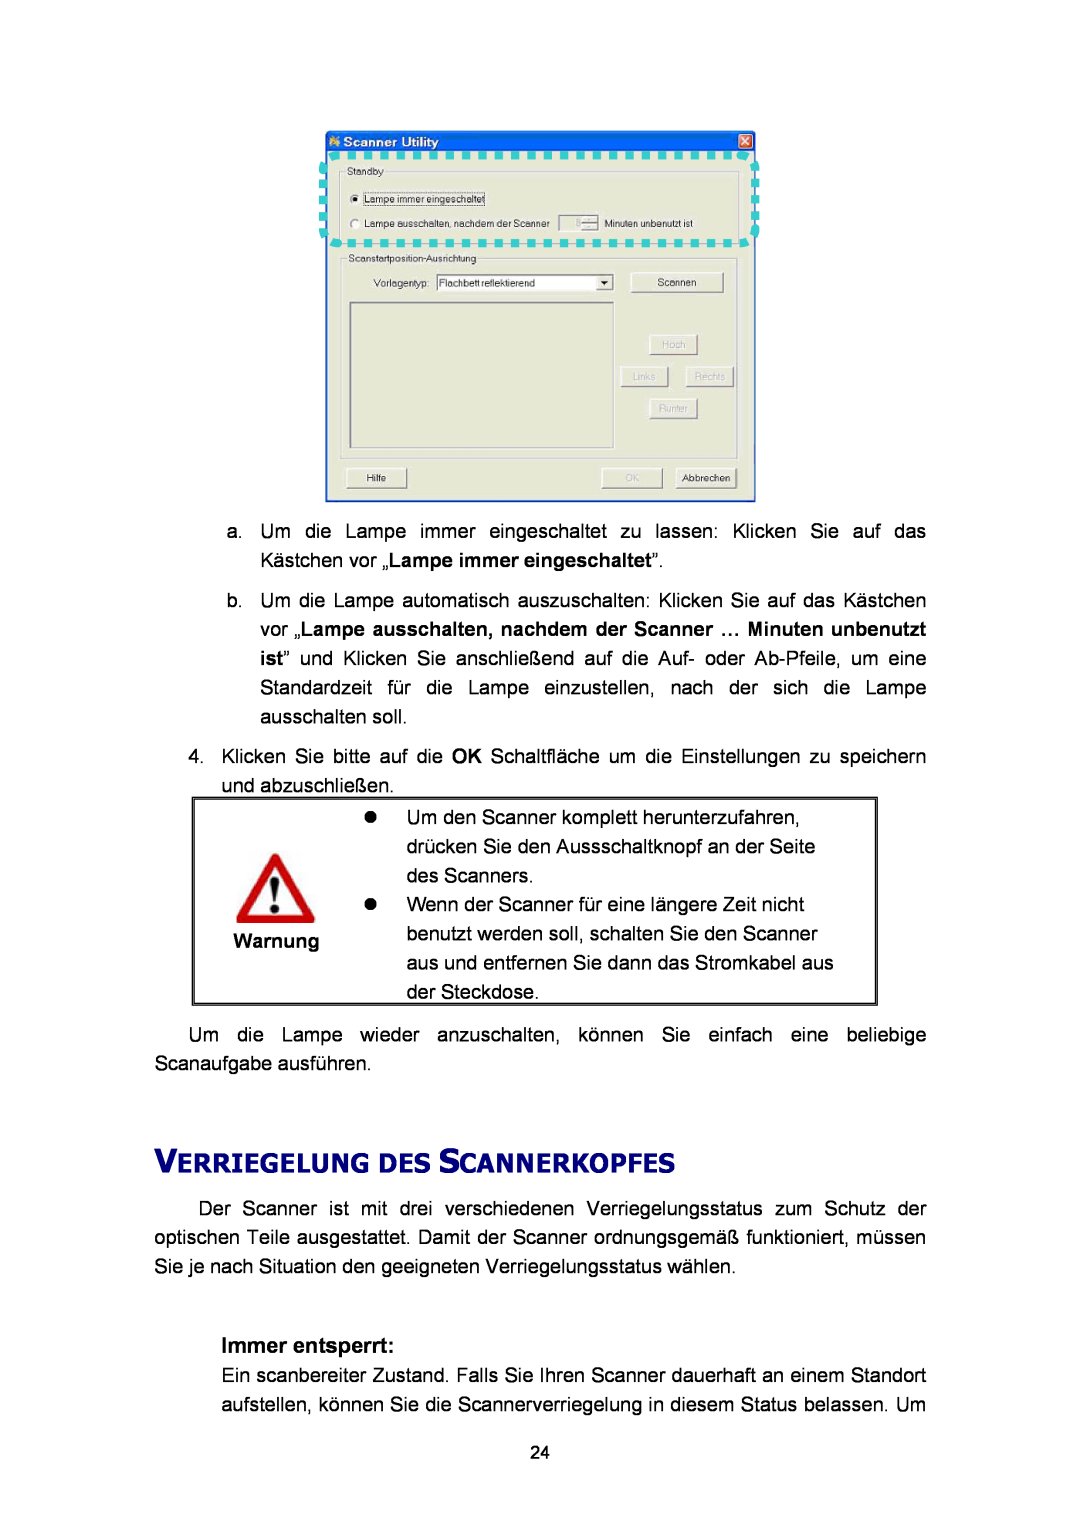 Plustek A360, Scanner-Benutzerhandbuch manual Verriegelung Des Scannerkopfes, Immer entsperrt, Warnung 